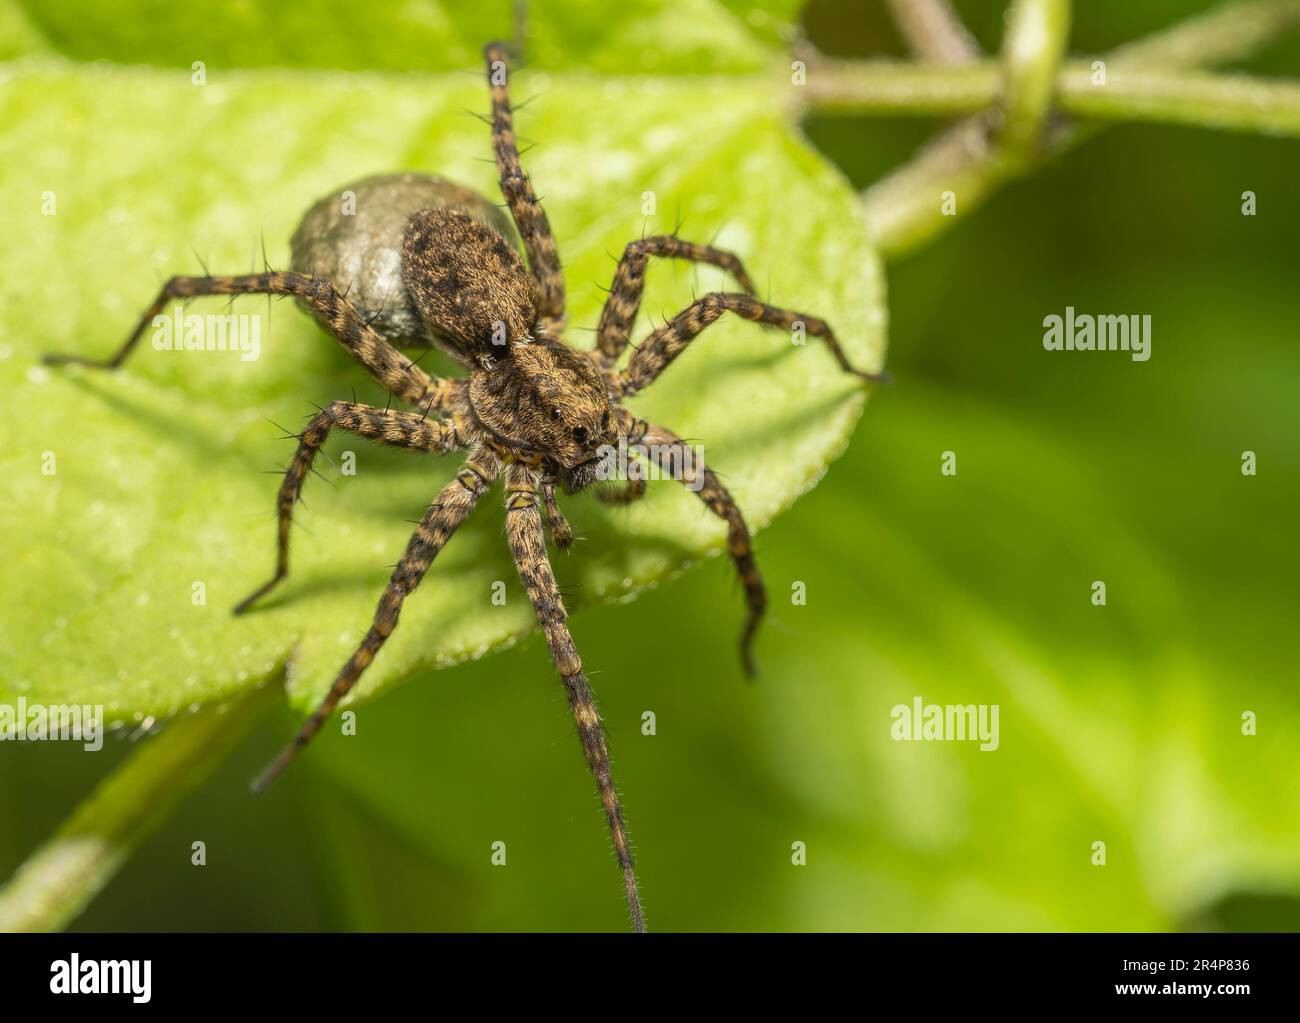 Hogna radiata araña lobo inofensiva peluda grande en una hoja de prado Foto de stock